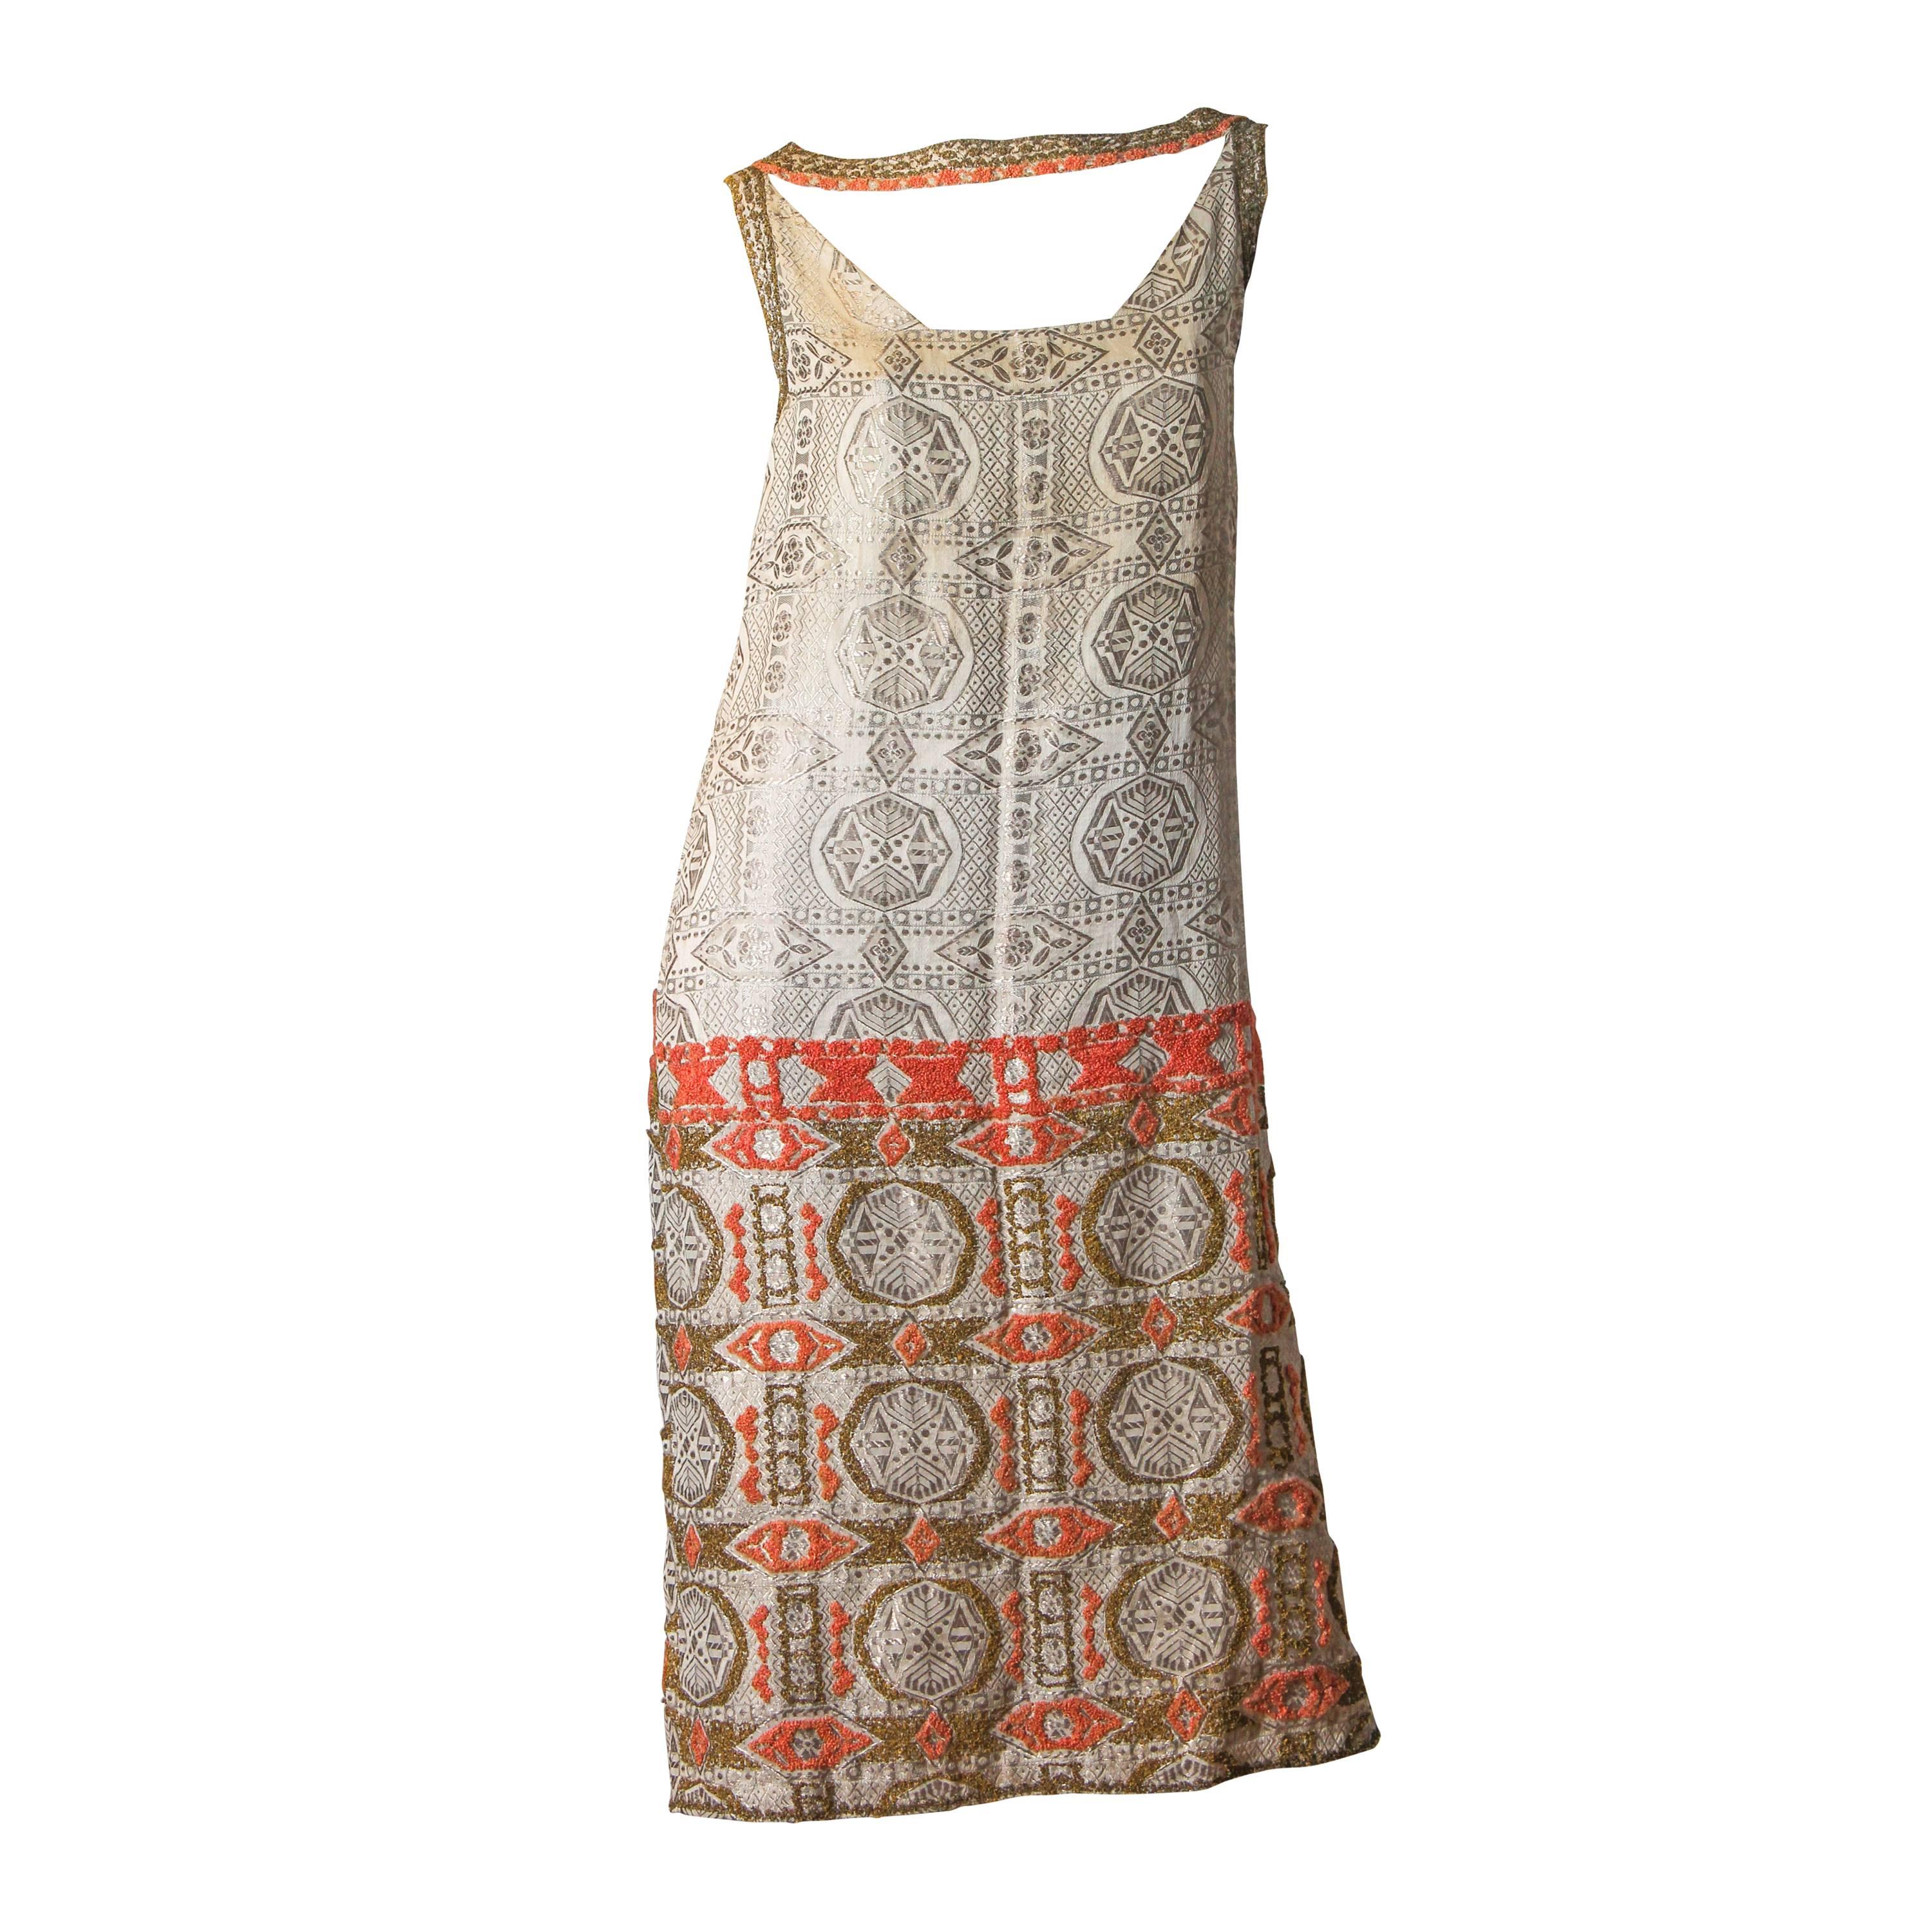 Embroidered 1920s Lamé Dress